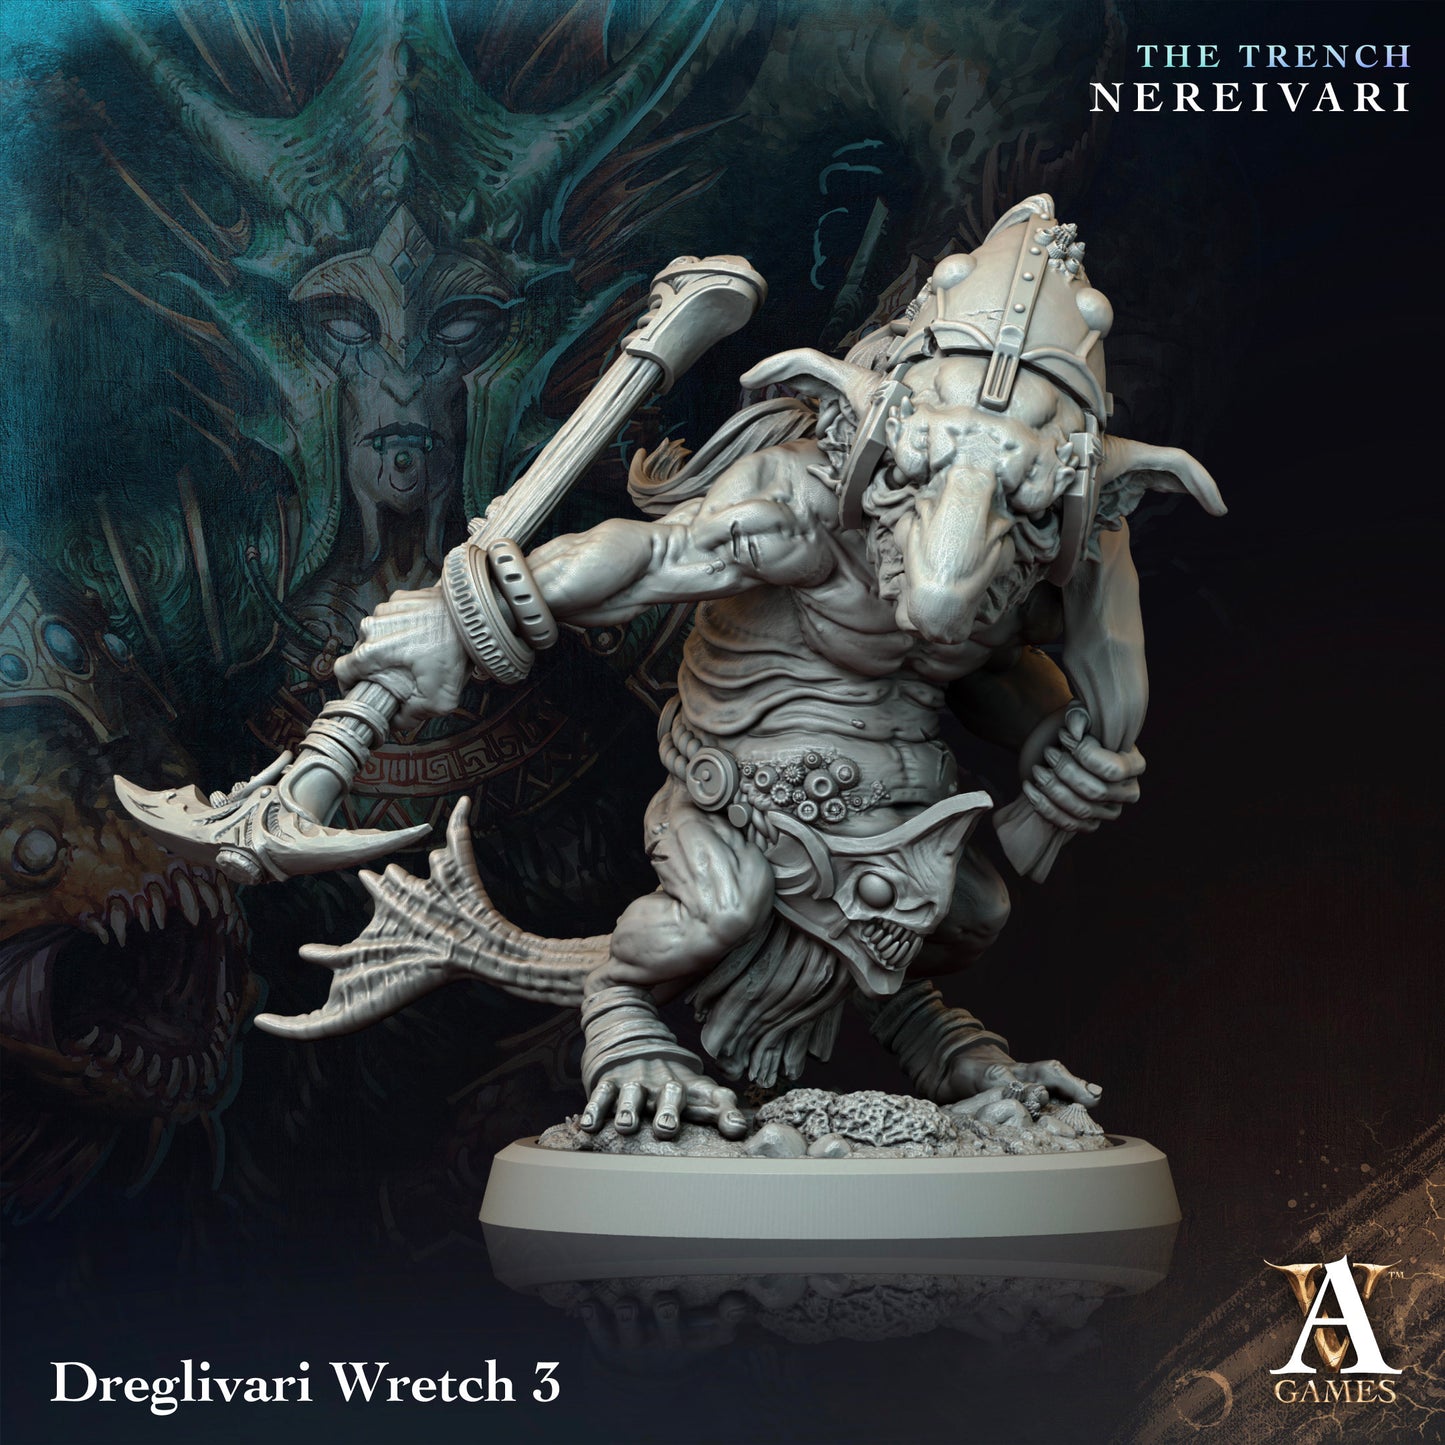 Dreglivari Wretch -The Trench - Nereivari